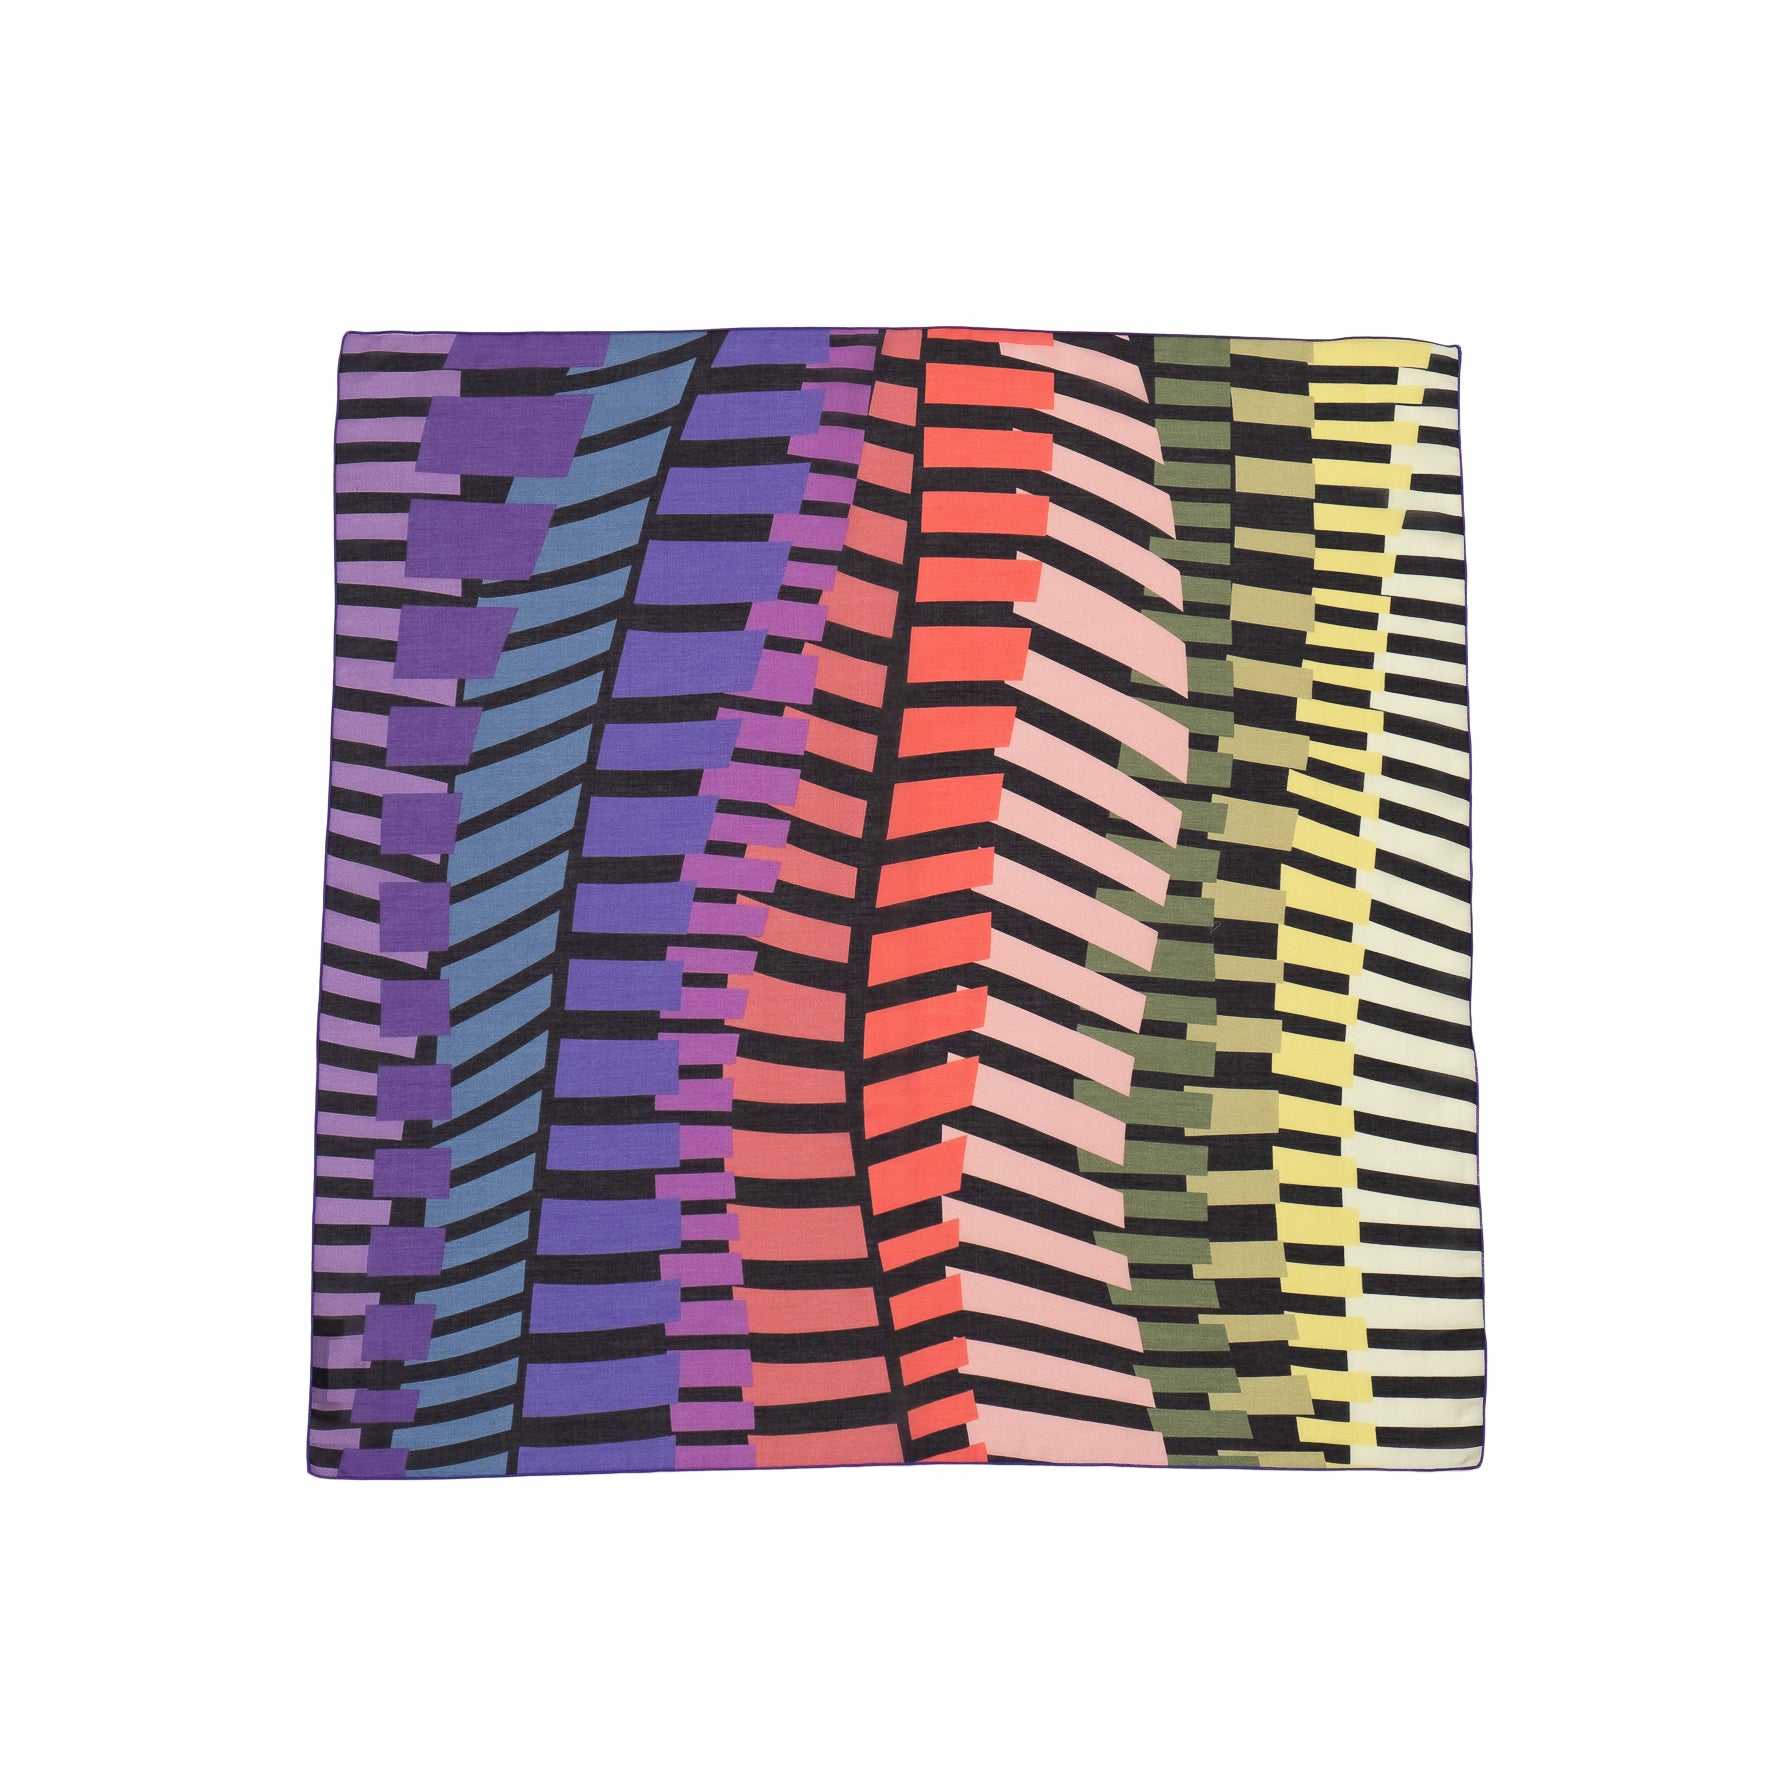 Japanese Printed Silk Cotton 'Piano' rainbow スカーフリング付きミニスカーフ